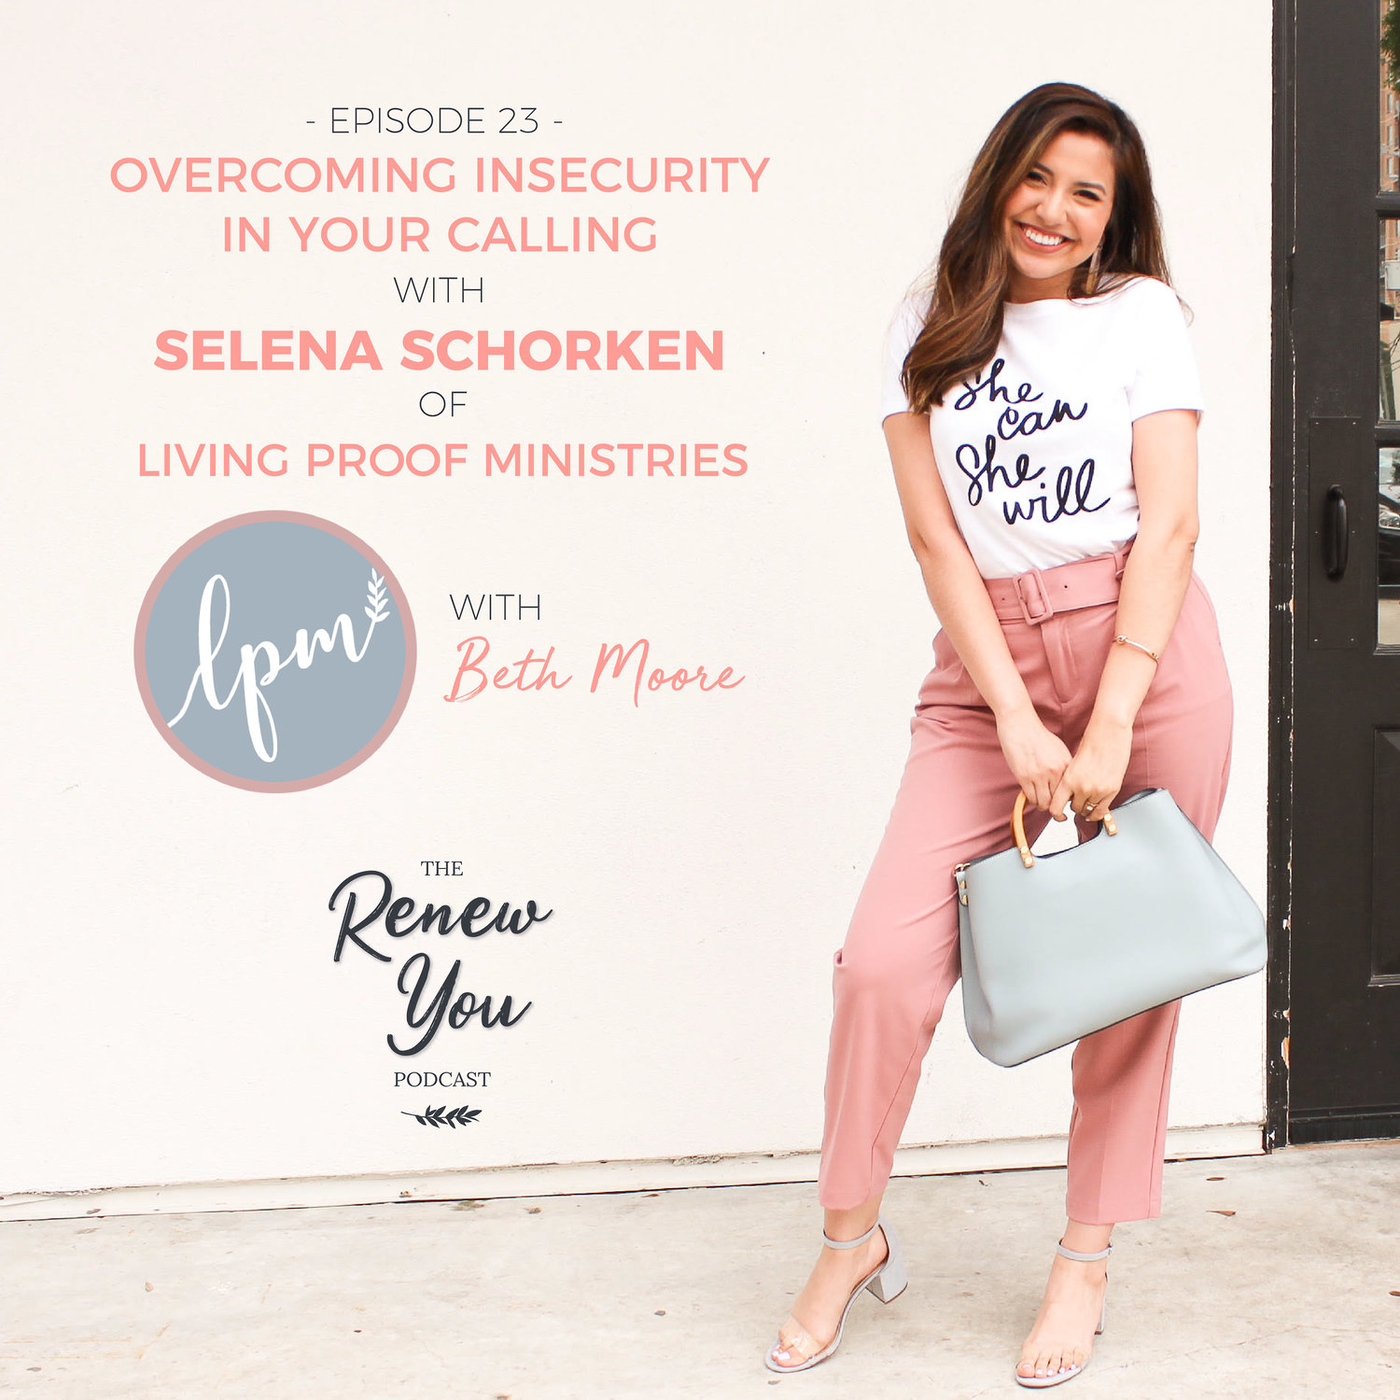 Episode 23: Overcoming Insecurity in Your Calling with Selena Schorken